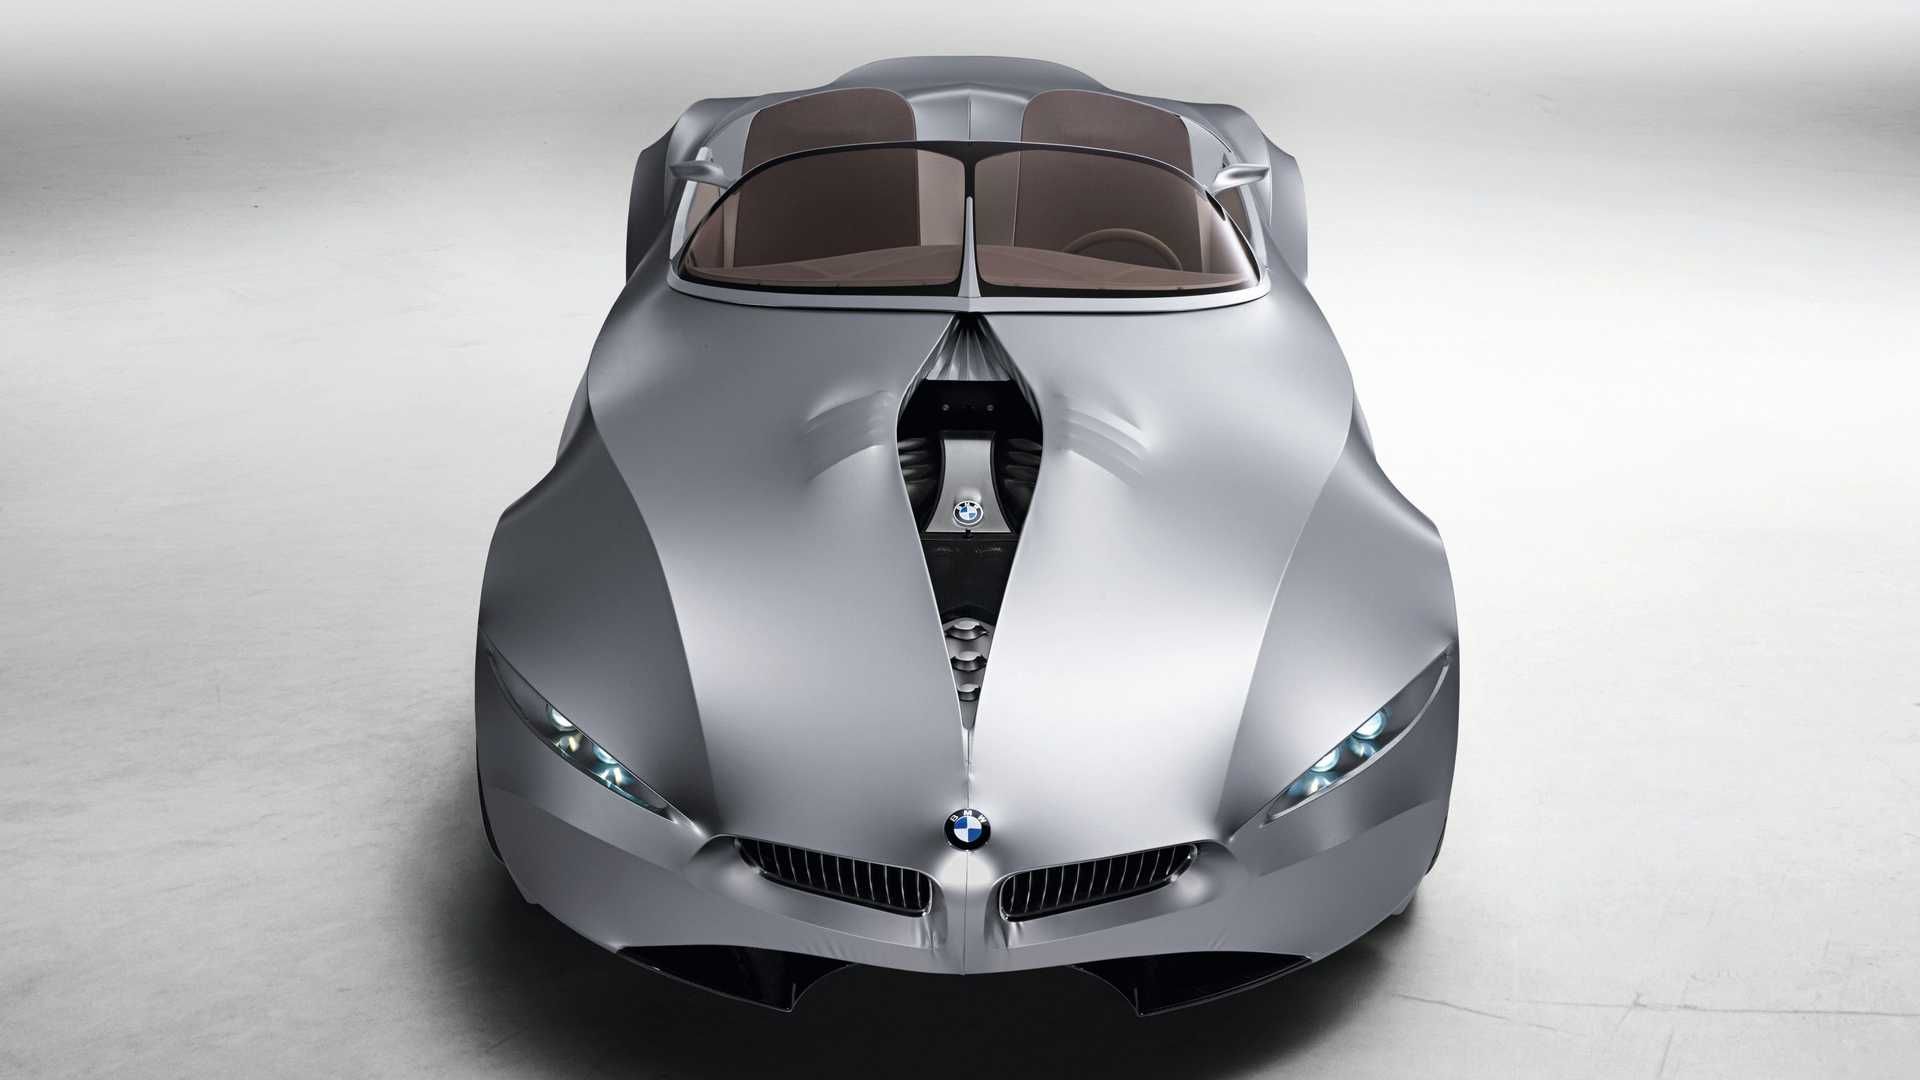 مرجع متخصصين ايران نماي بالا خودروي مفهومي روباز بي ام و گينا / BMW GINA concept convertible